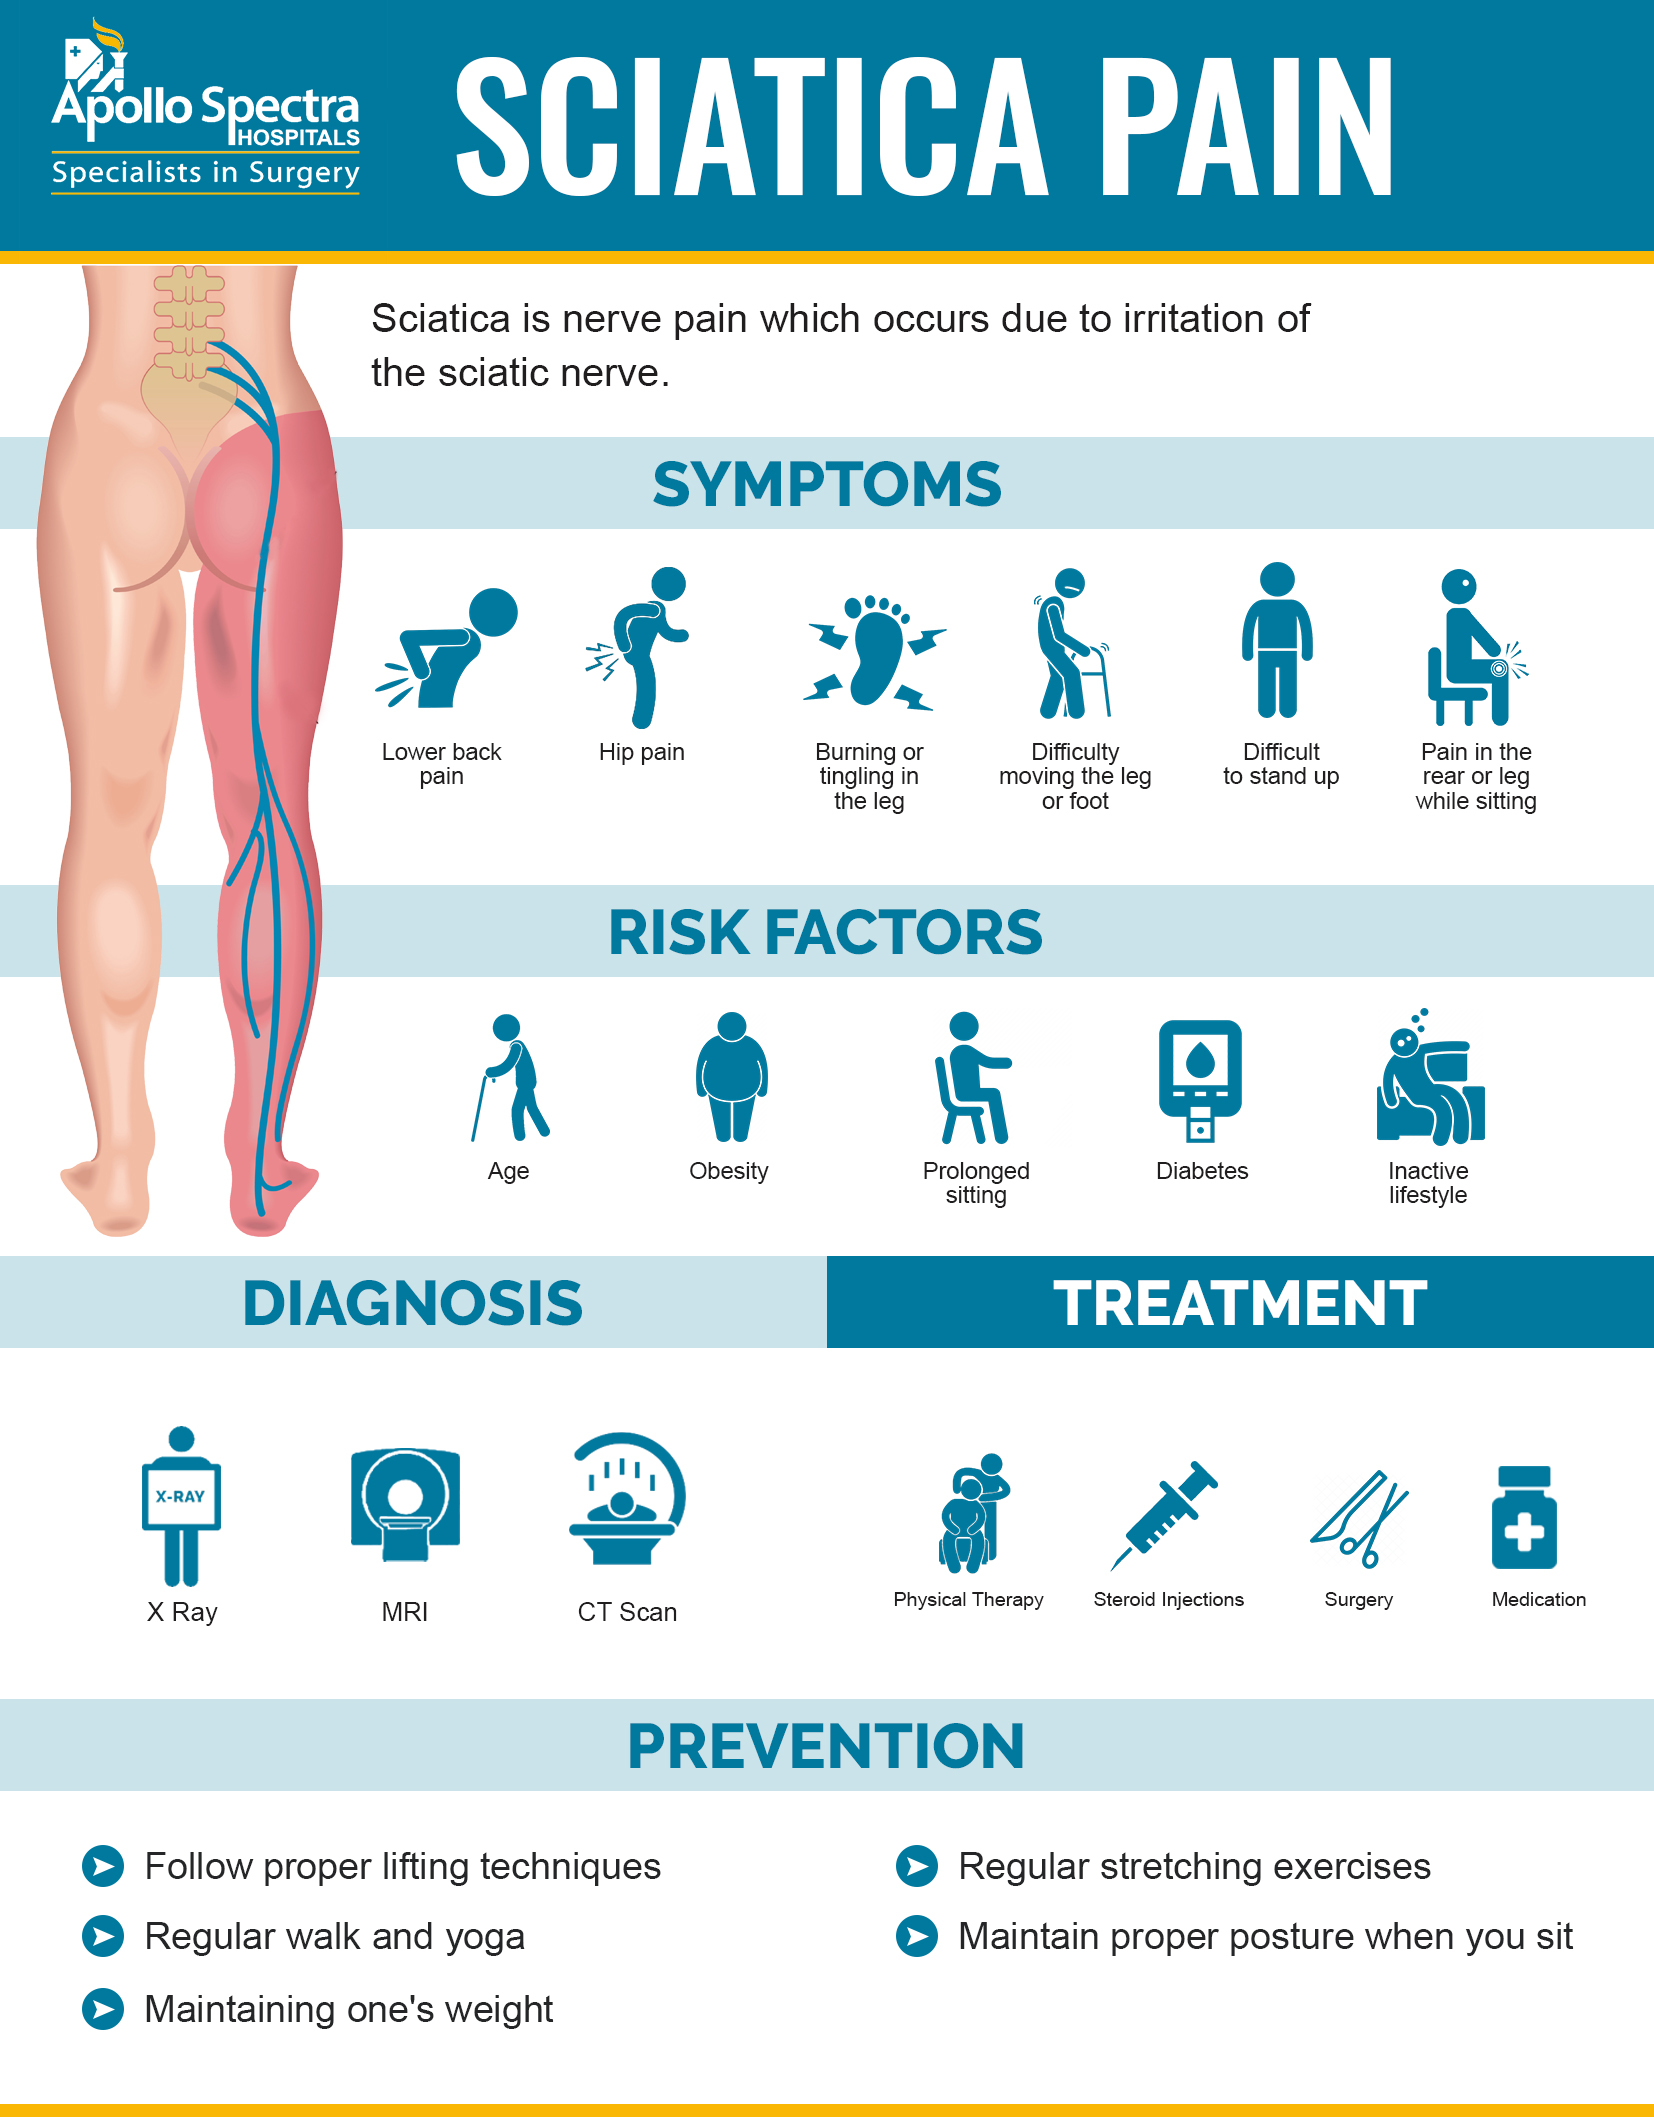 What makes sciatica worse?